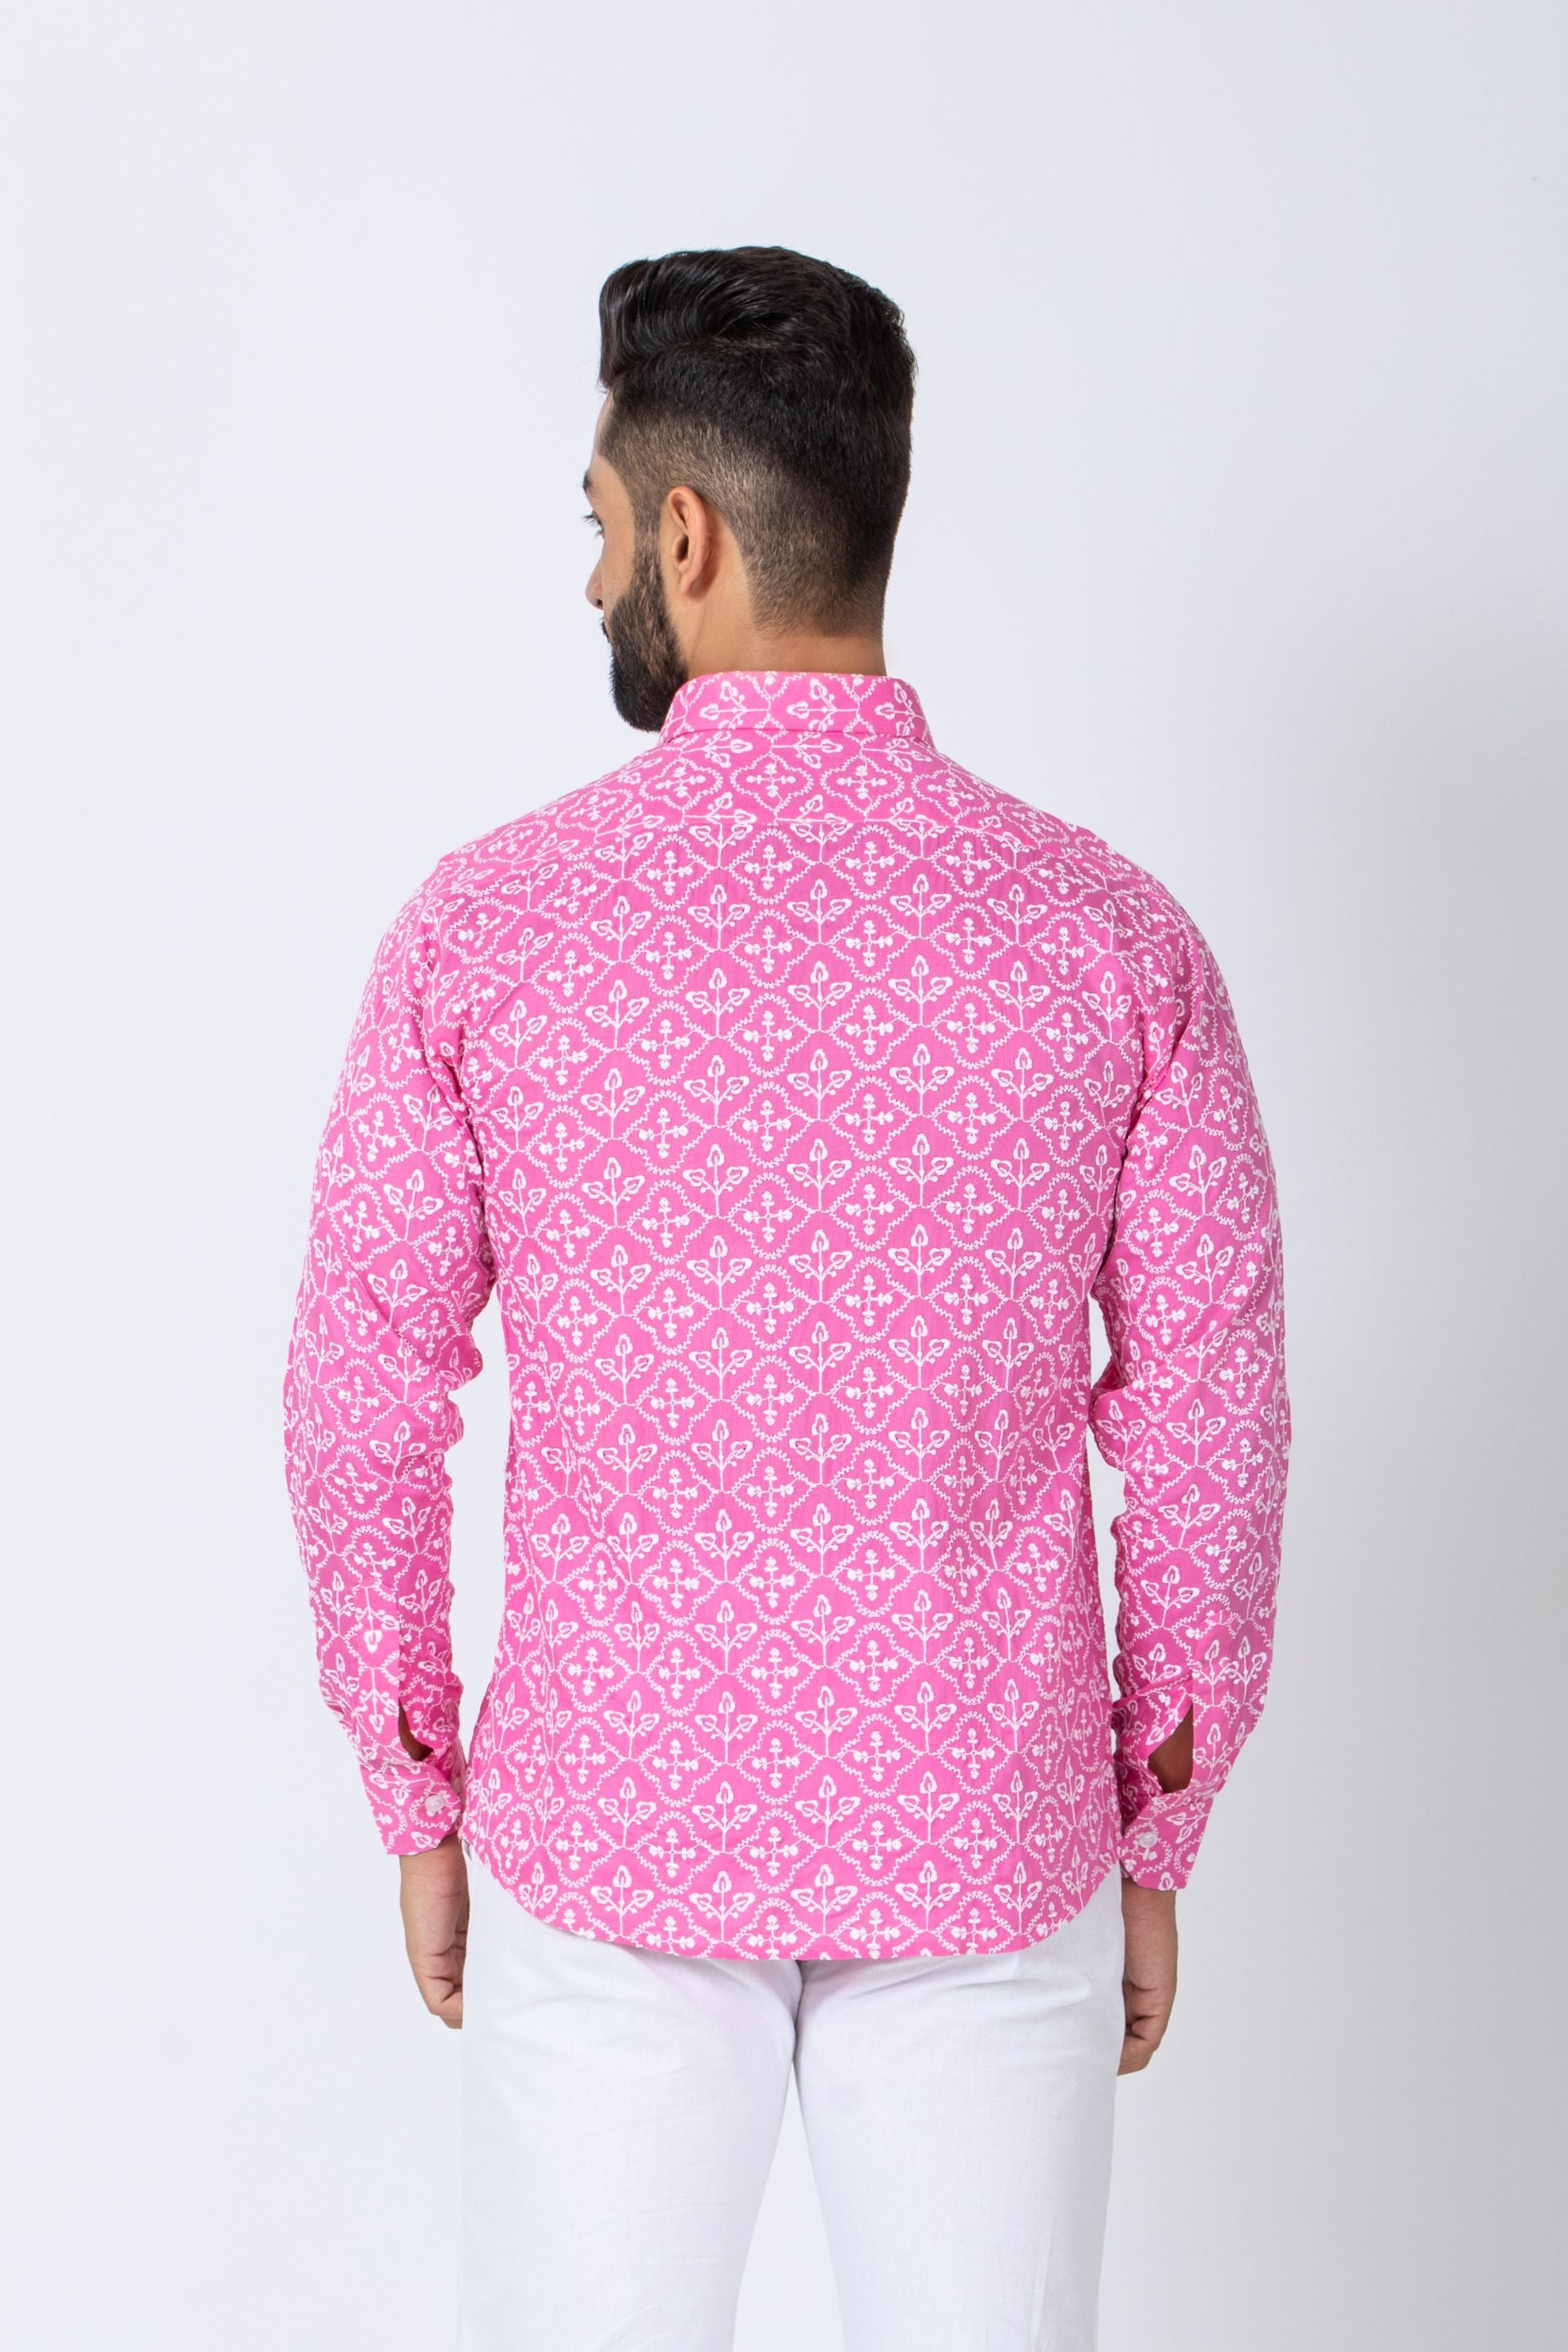 Firangi Yarn Super Soft Full Sleeves Chikankari Schiffli Embroided Men's Shirt